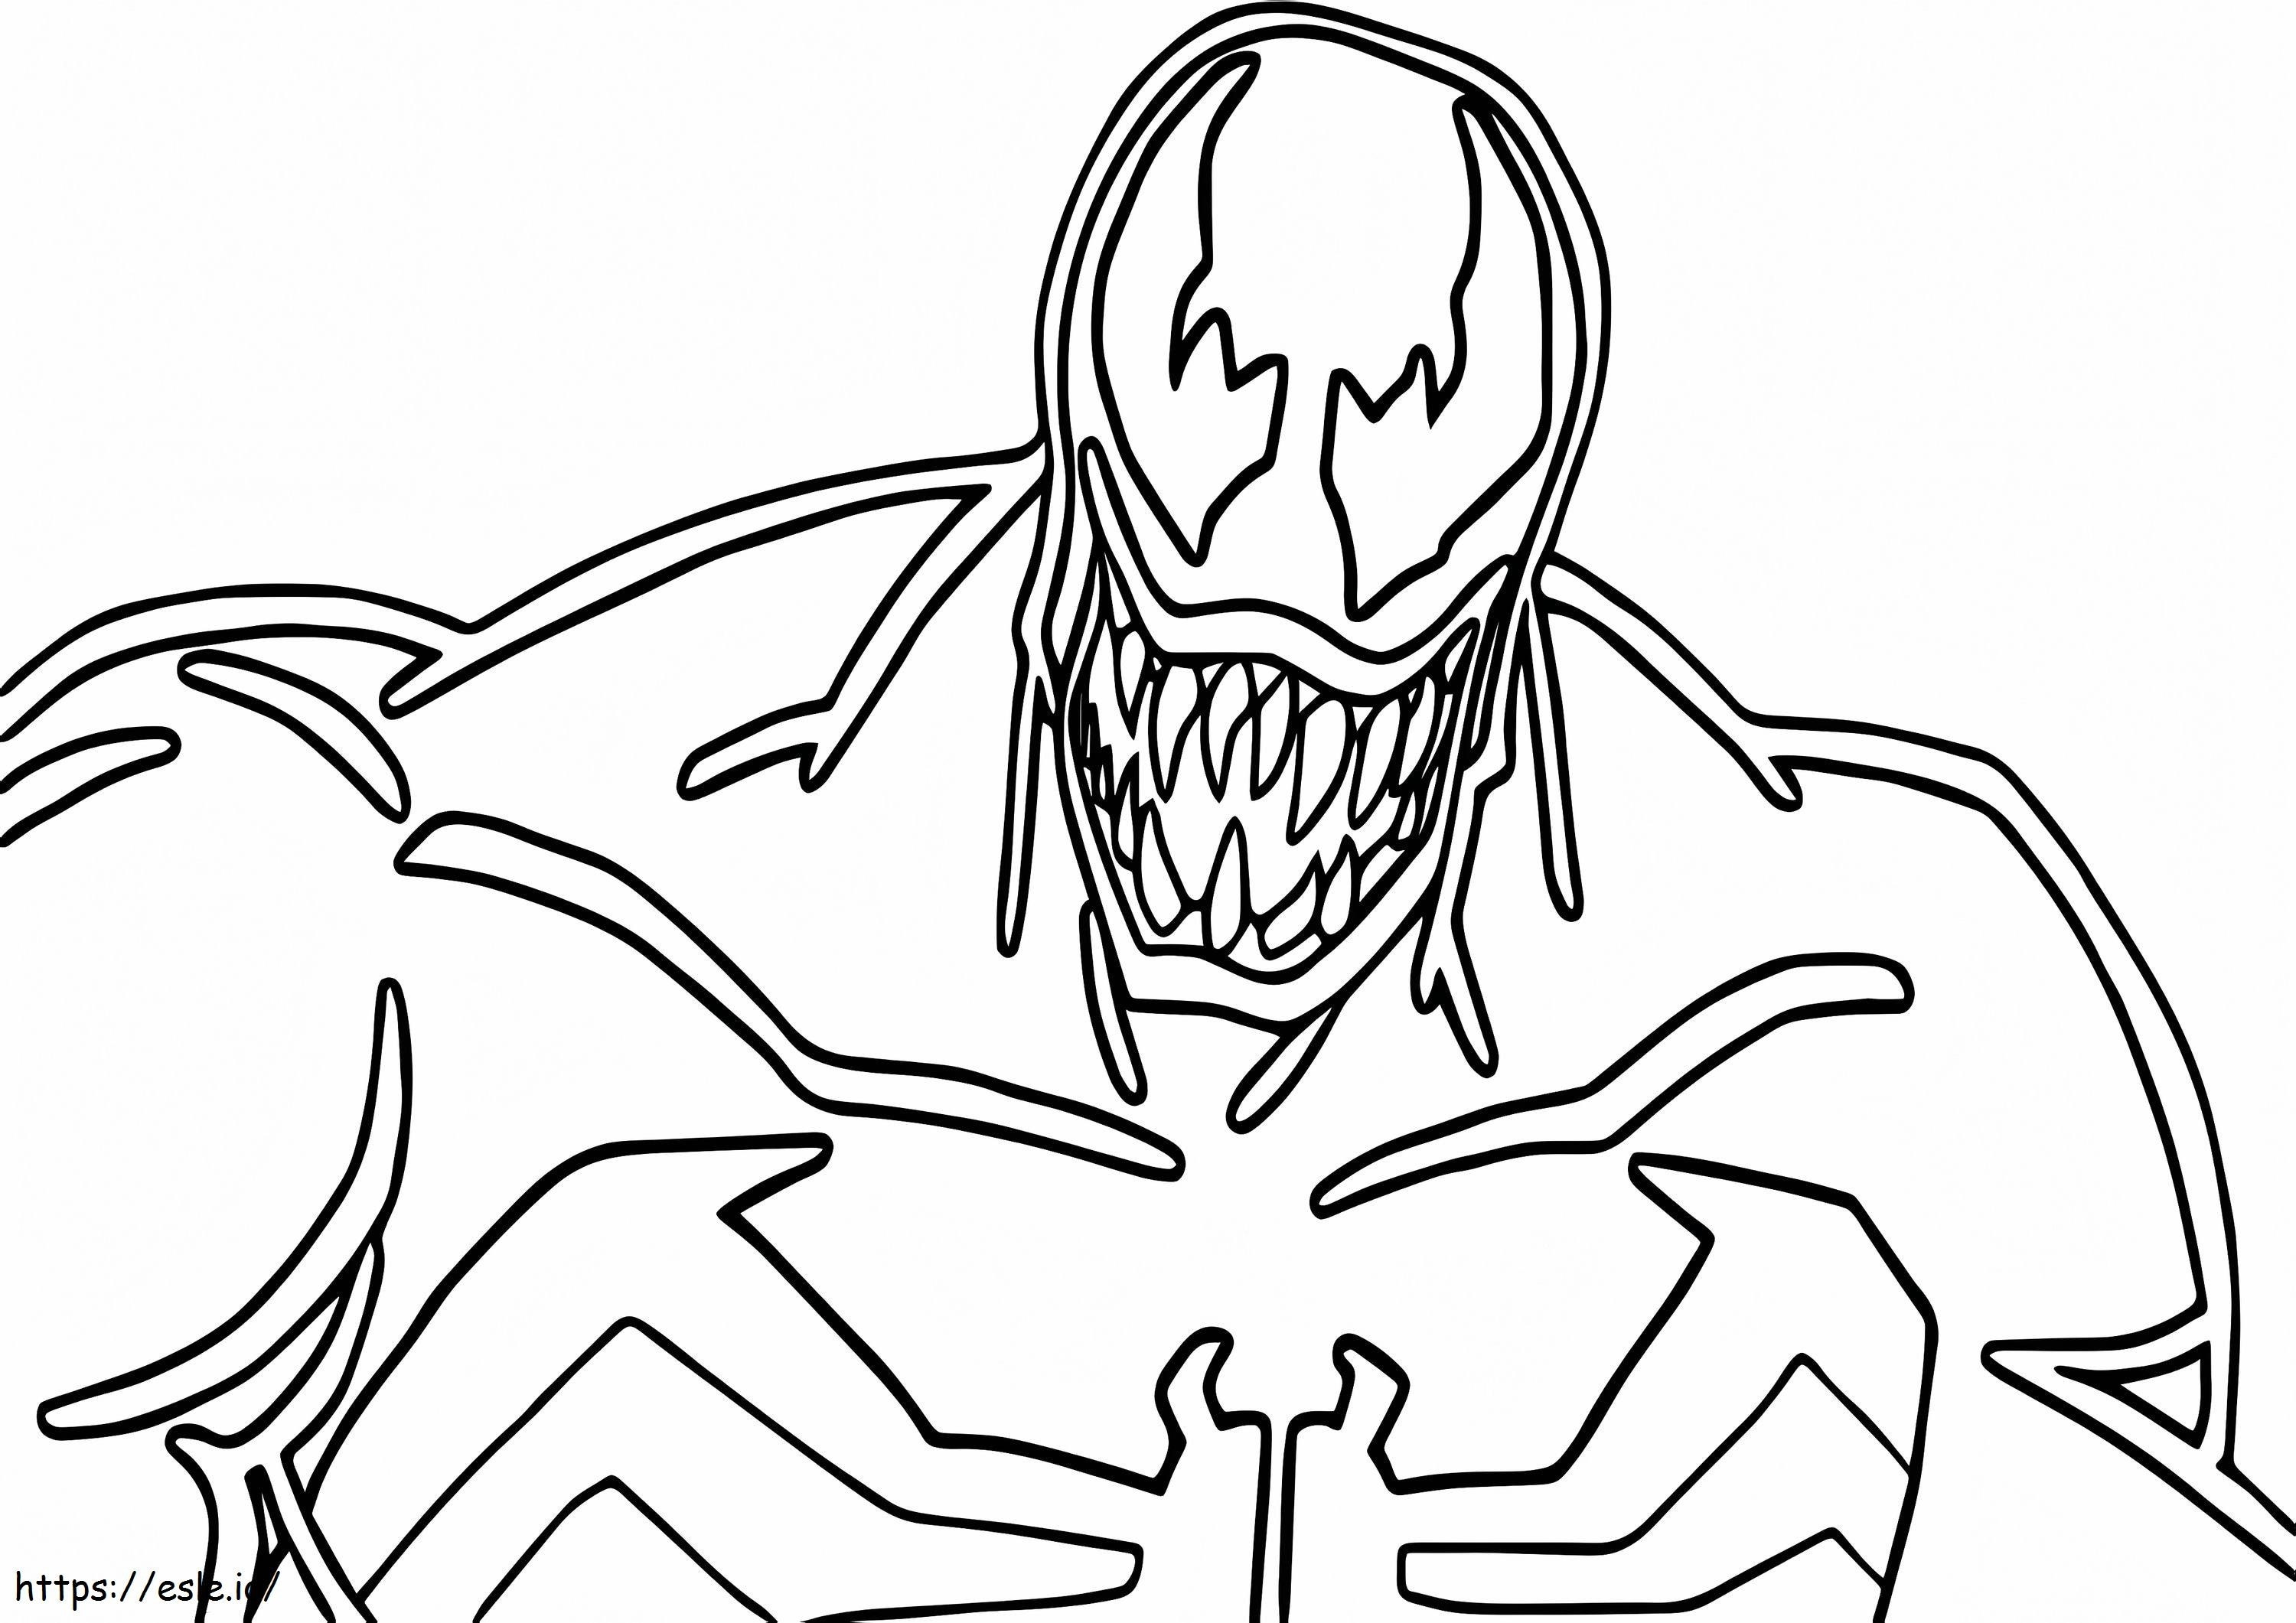 Invincible Venom coloring page